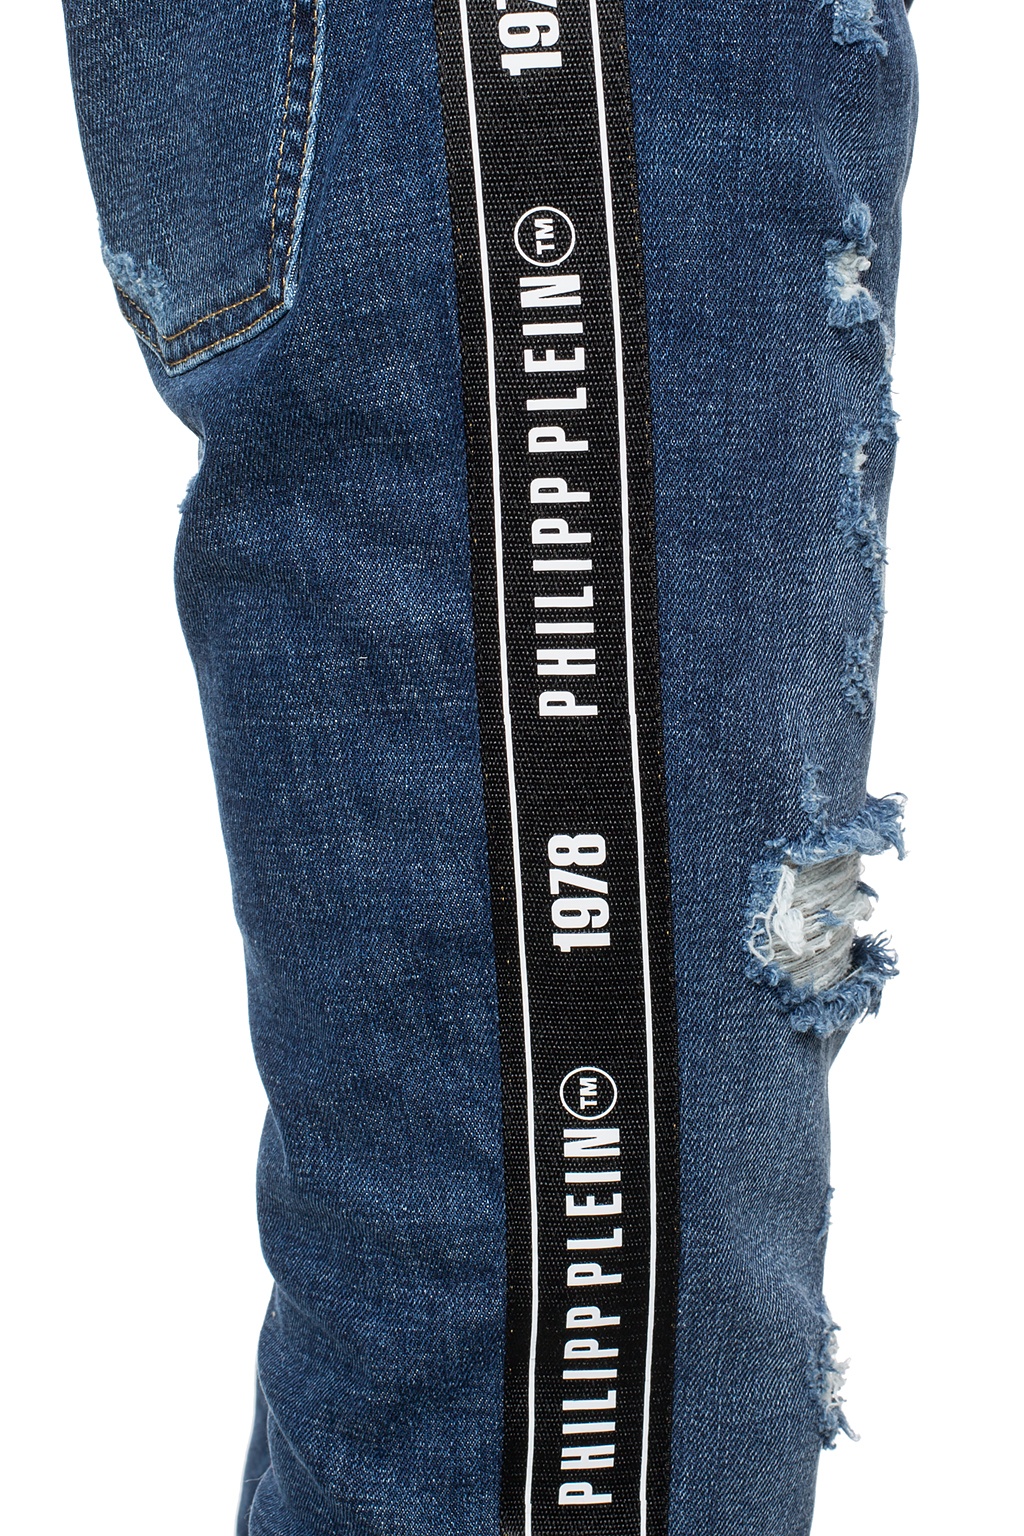 philipp plein jeans logo